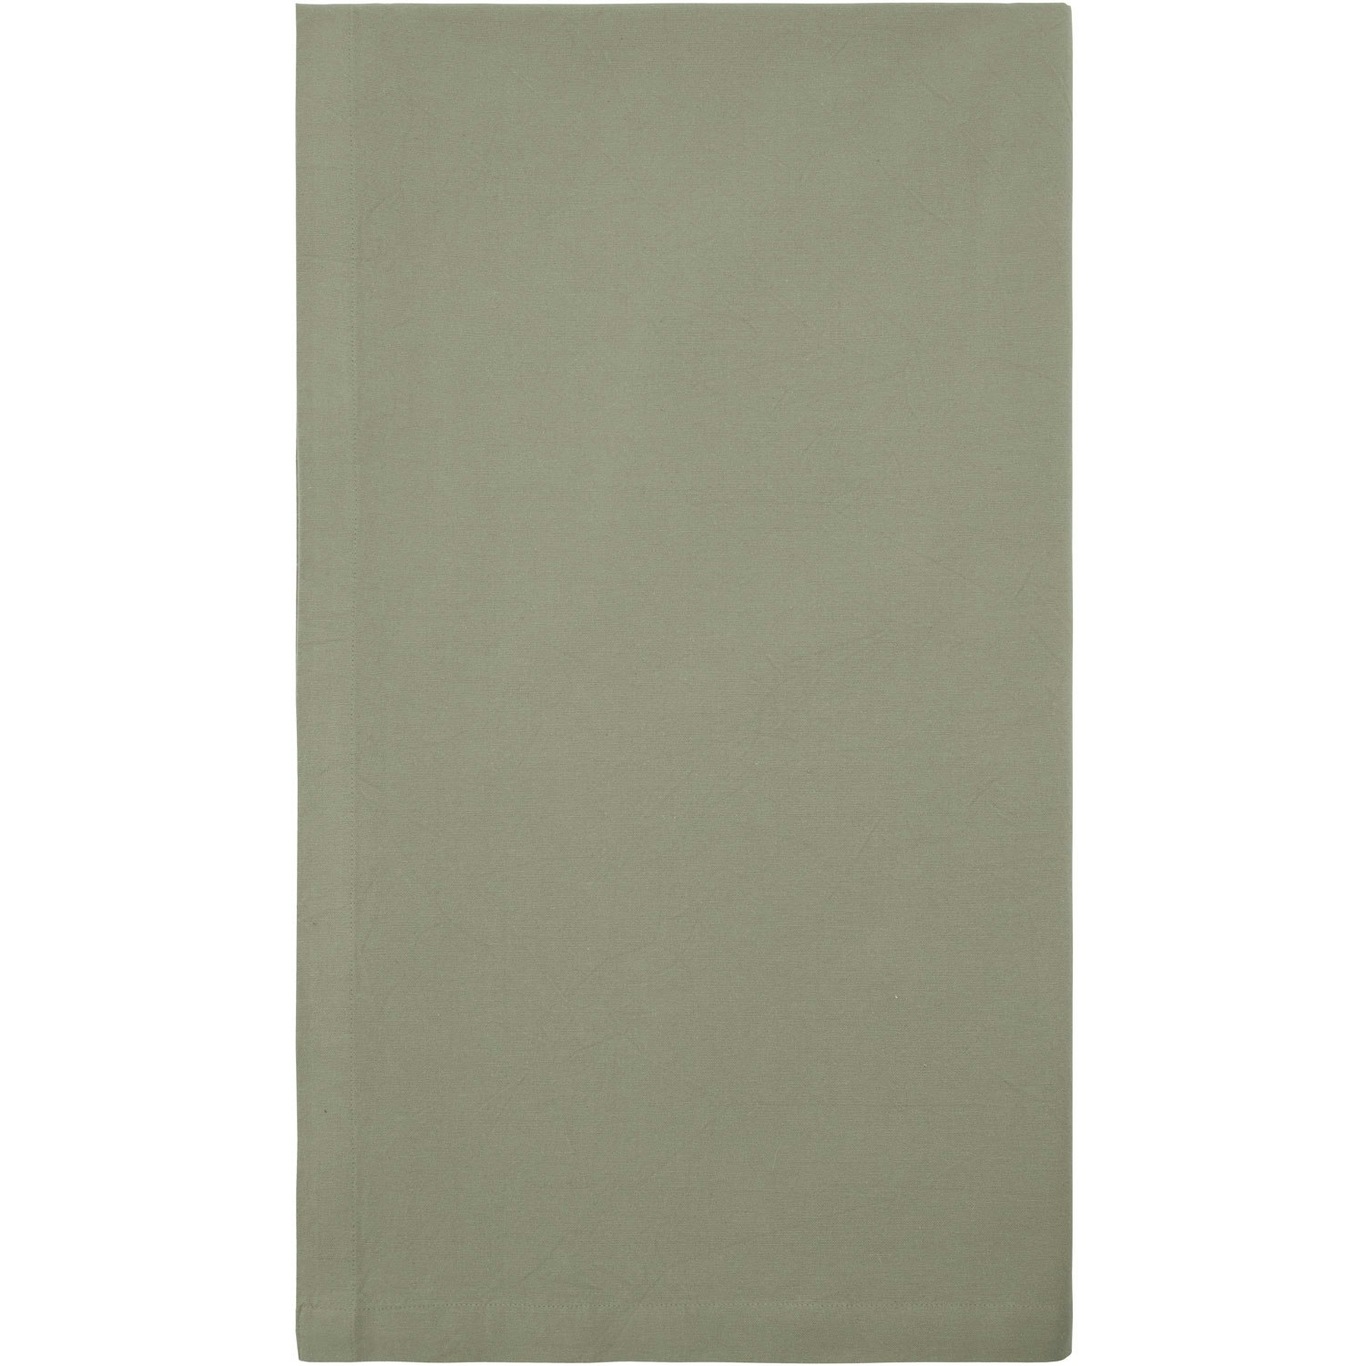 HDReal Pöytäliina 140x240 cm, Olive